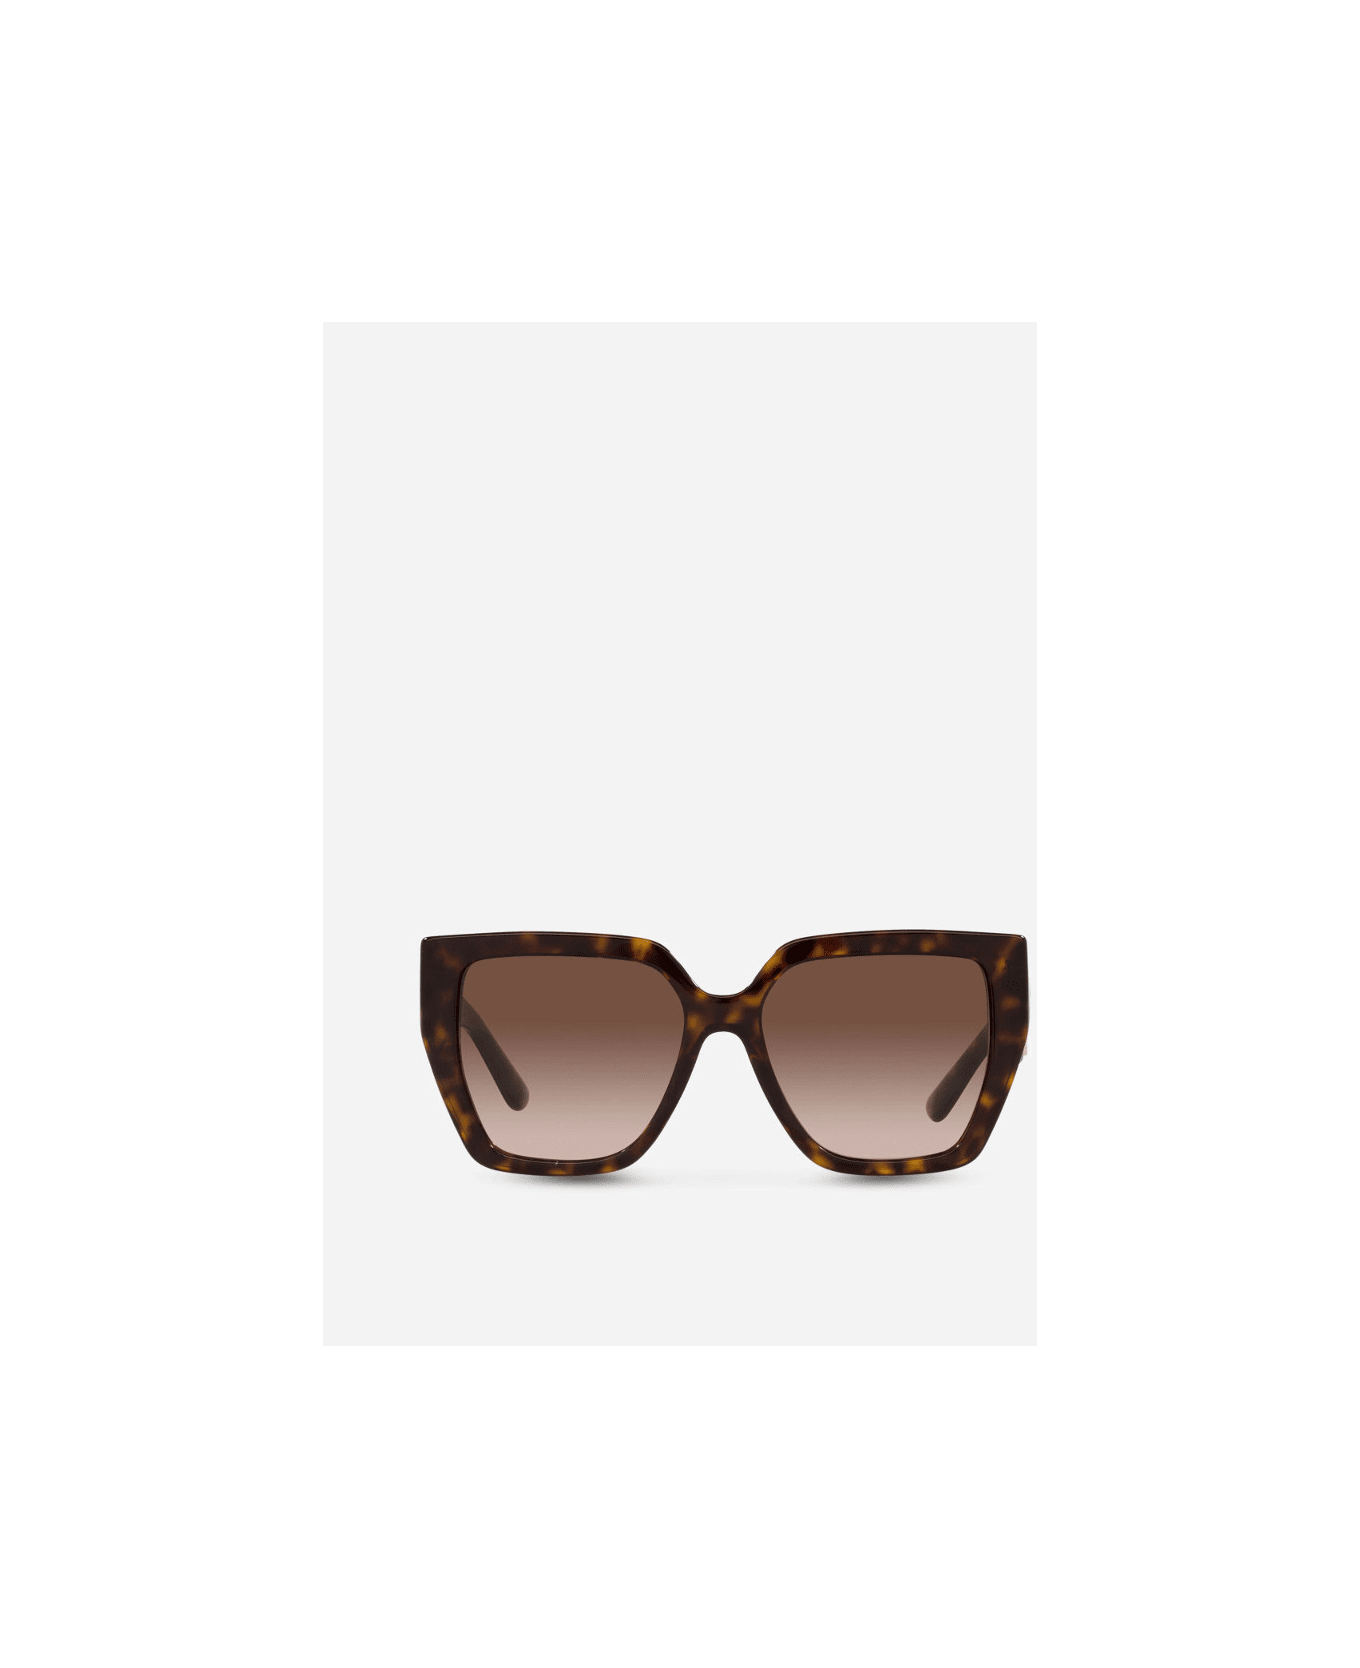 Dolce & Gabbana Eyewear DG4438s 502/13 Sunglasses - Tartarugato